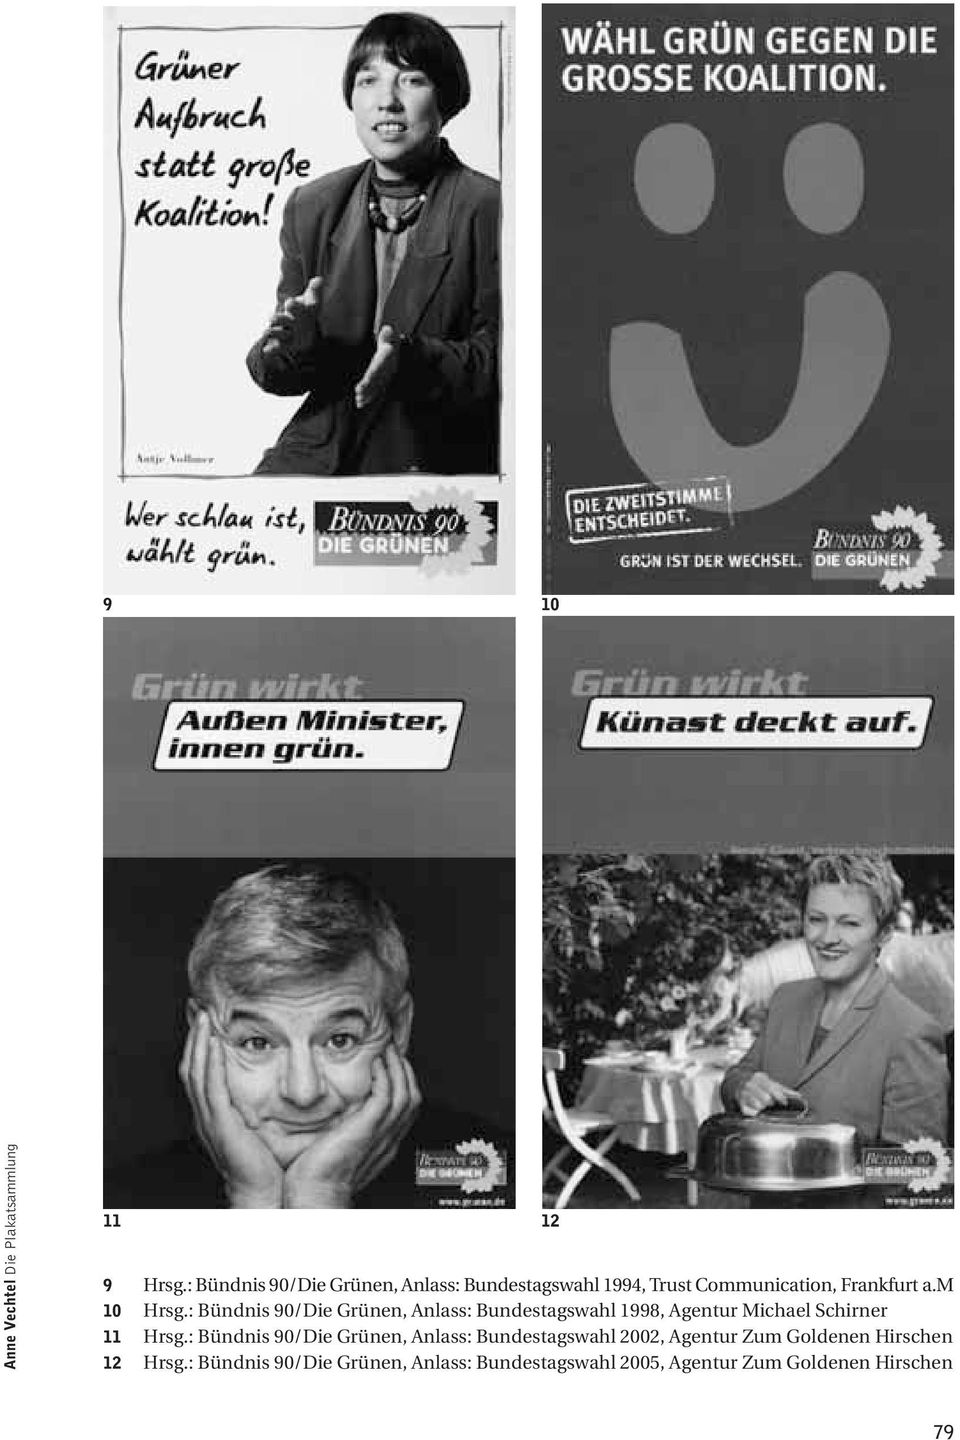 : Bündnis 90/Die Grünen, Anlass: Bundestagswahl 1998, Agentur Michael Schirner 11 Hrsg.